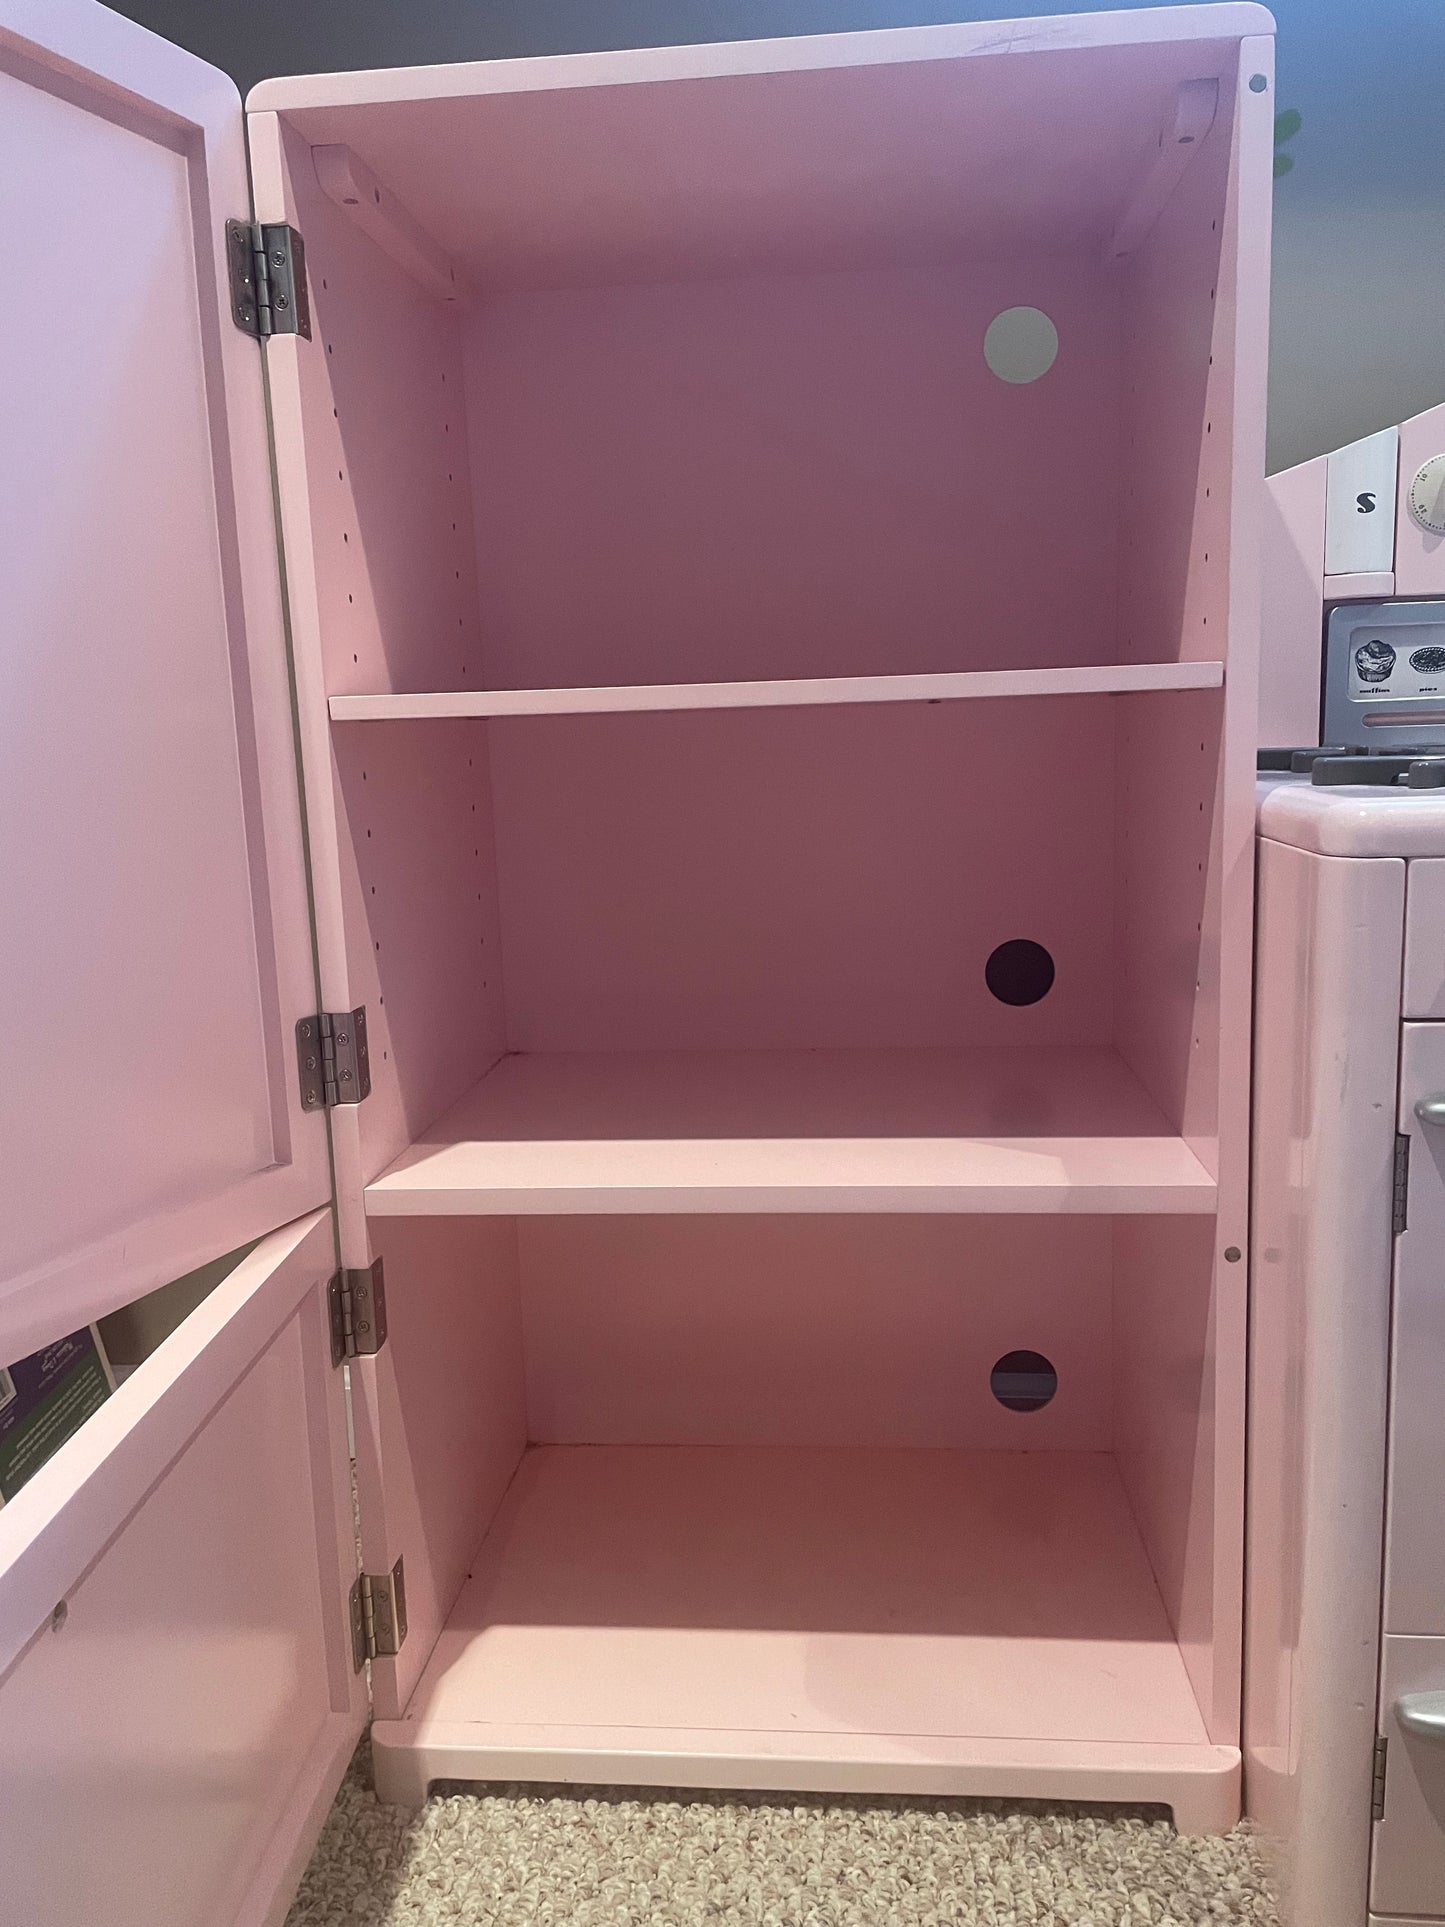 Pottery Barn pink retro play kitchen (fridge & stove) *PPU 45213*